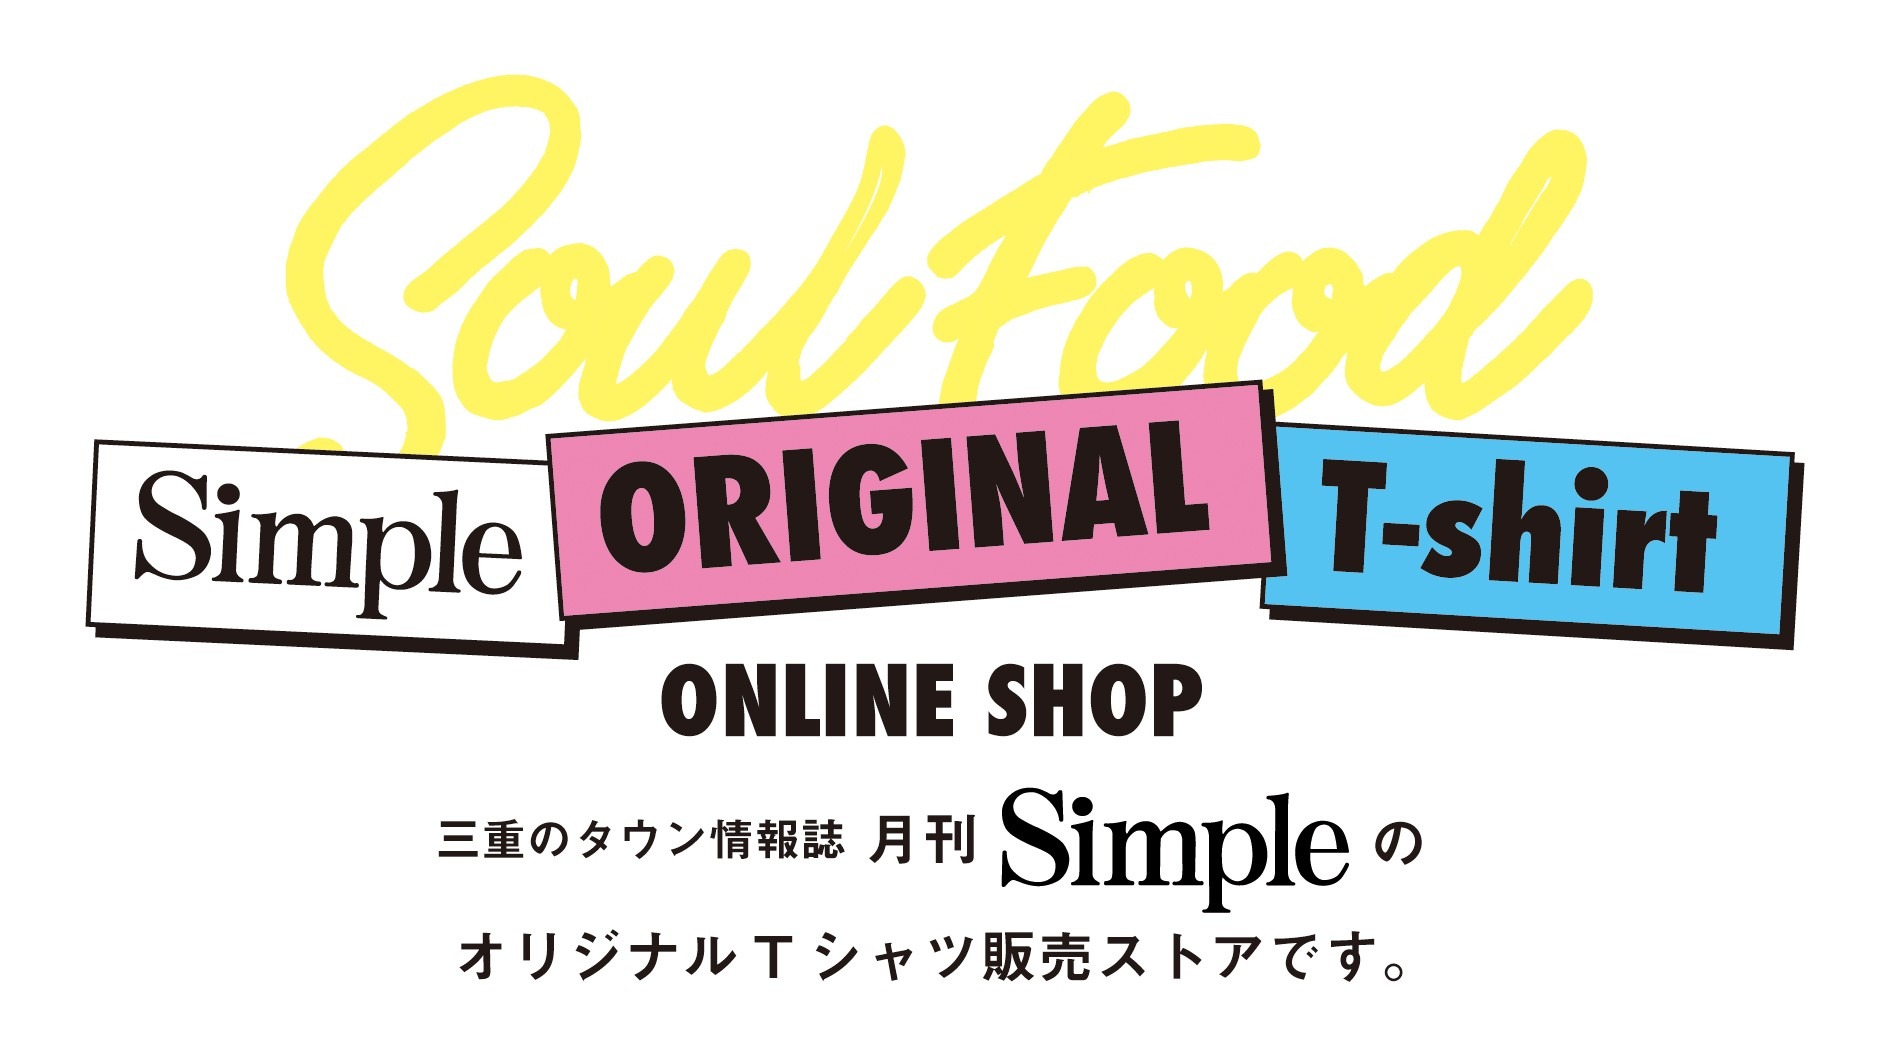 Simple online store